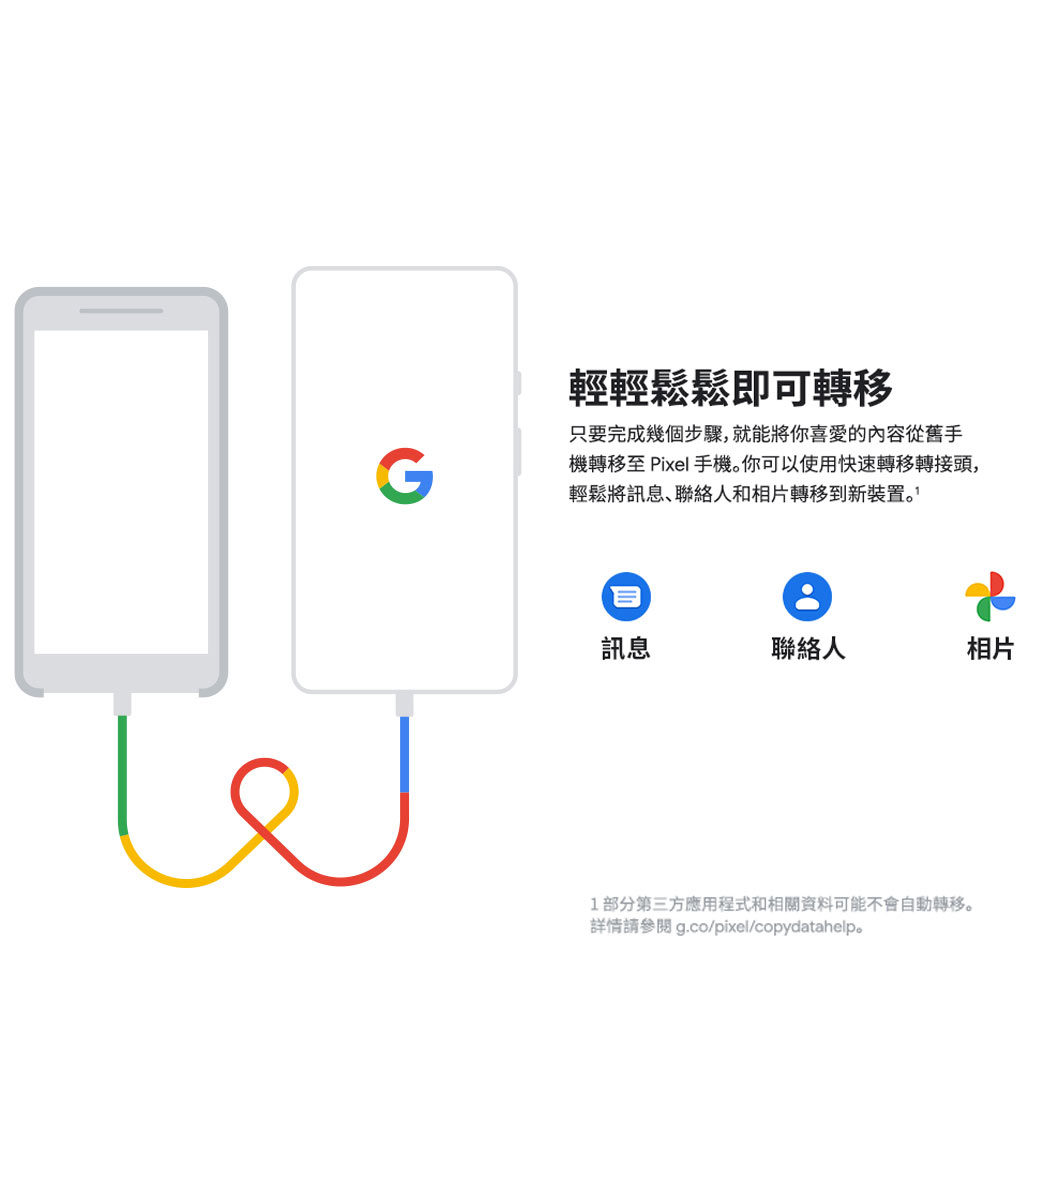       【Google】Pixel 6(8G/256G)